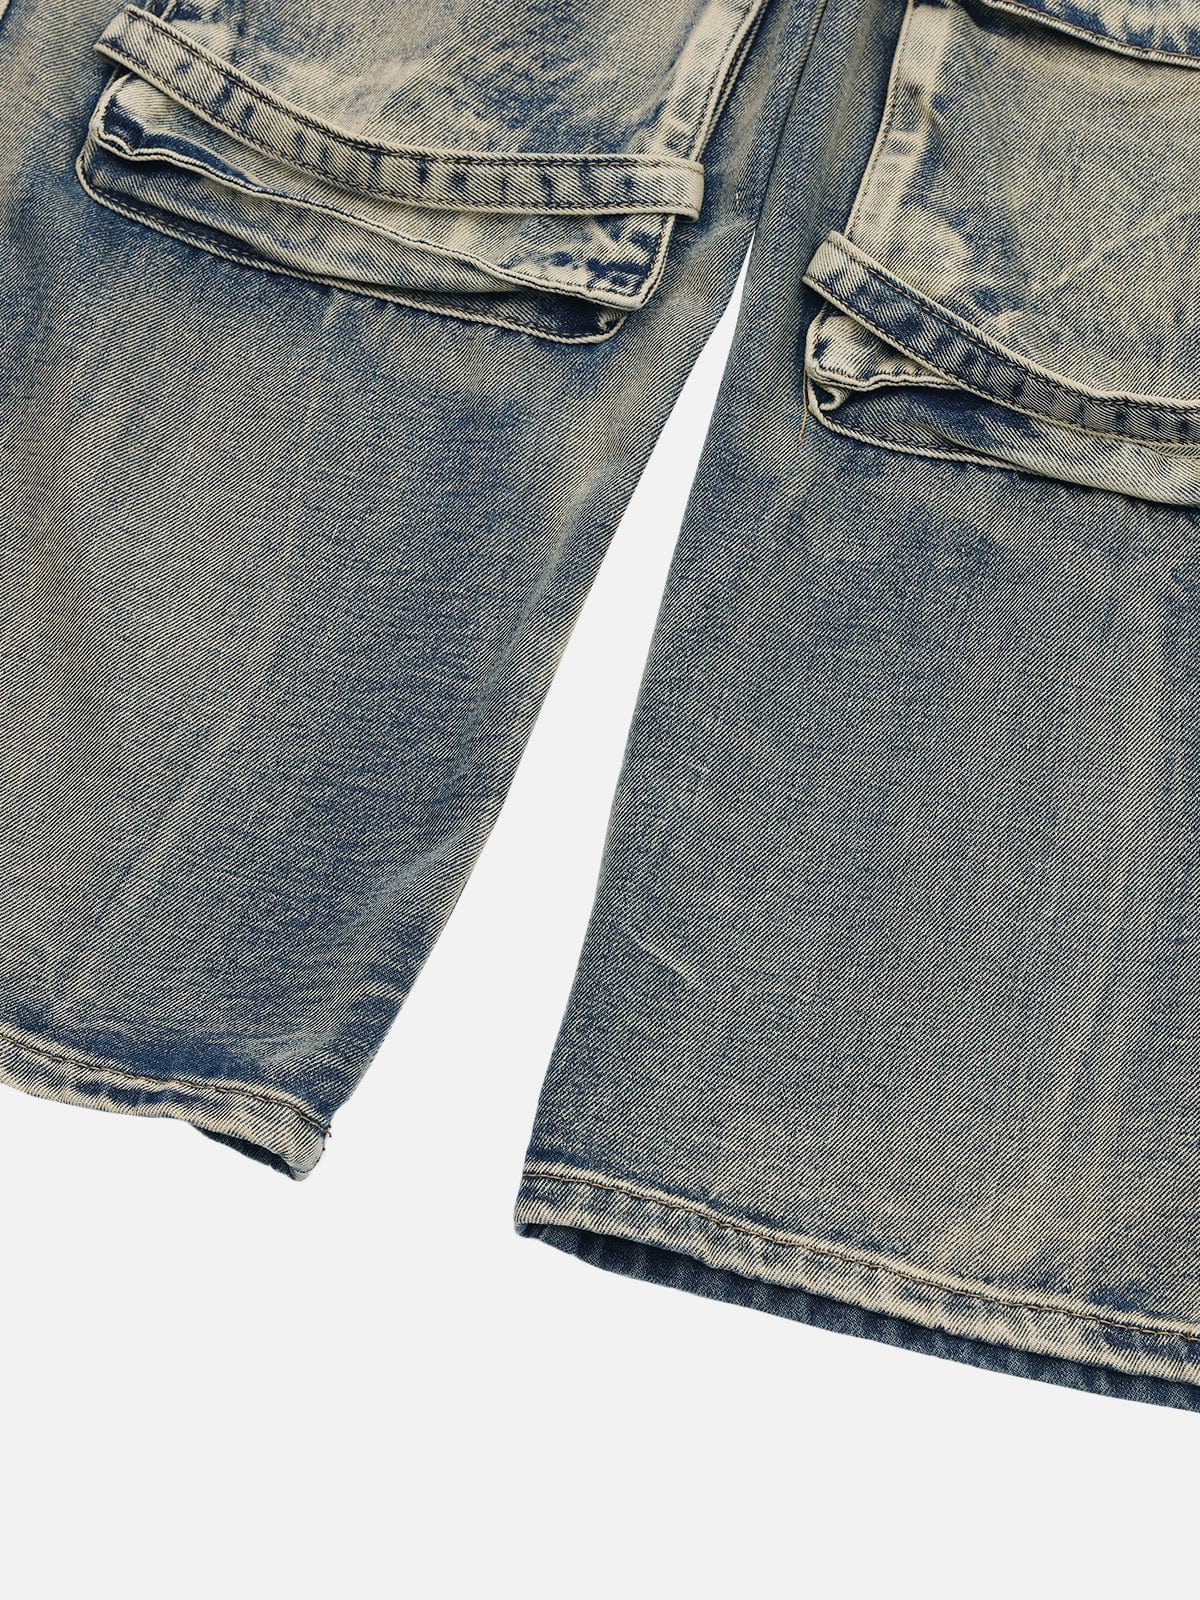 NEV Multiple Pockets Washed Jeans